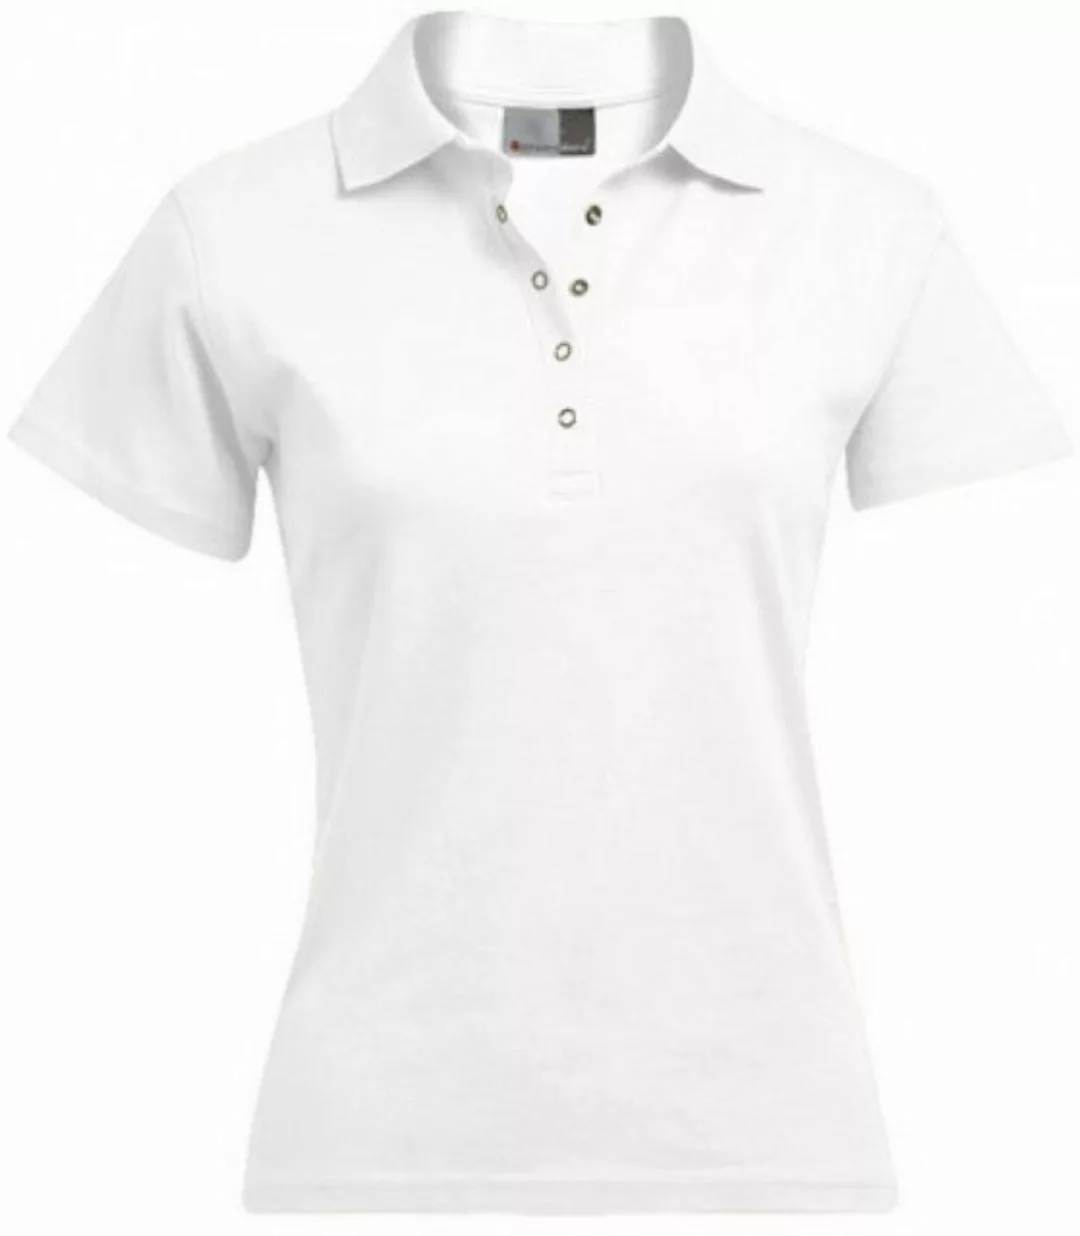 Promodoro Poloshirt Women´s Interlock Poloshirt günstig online kaufen